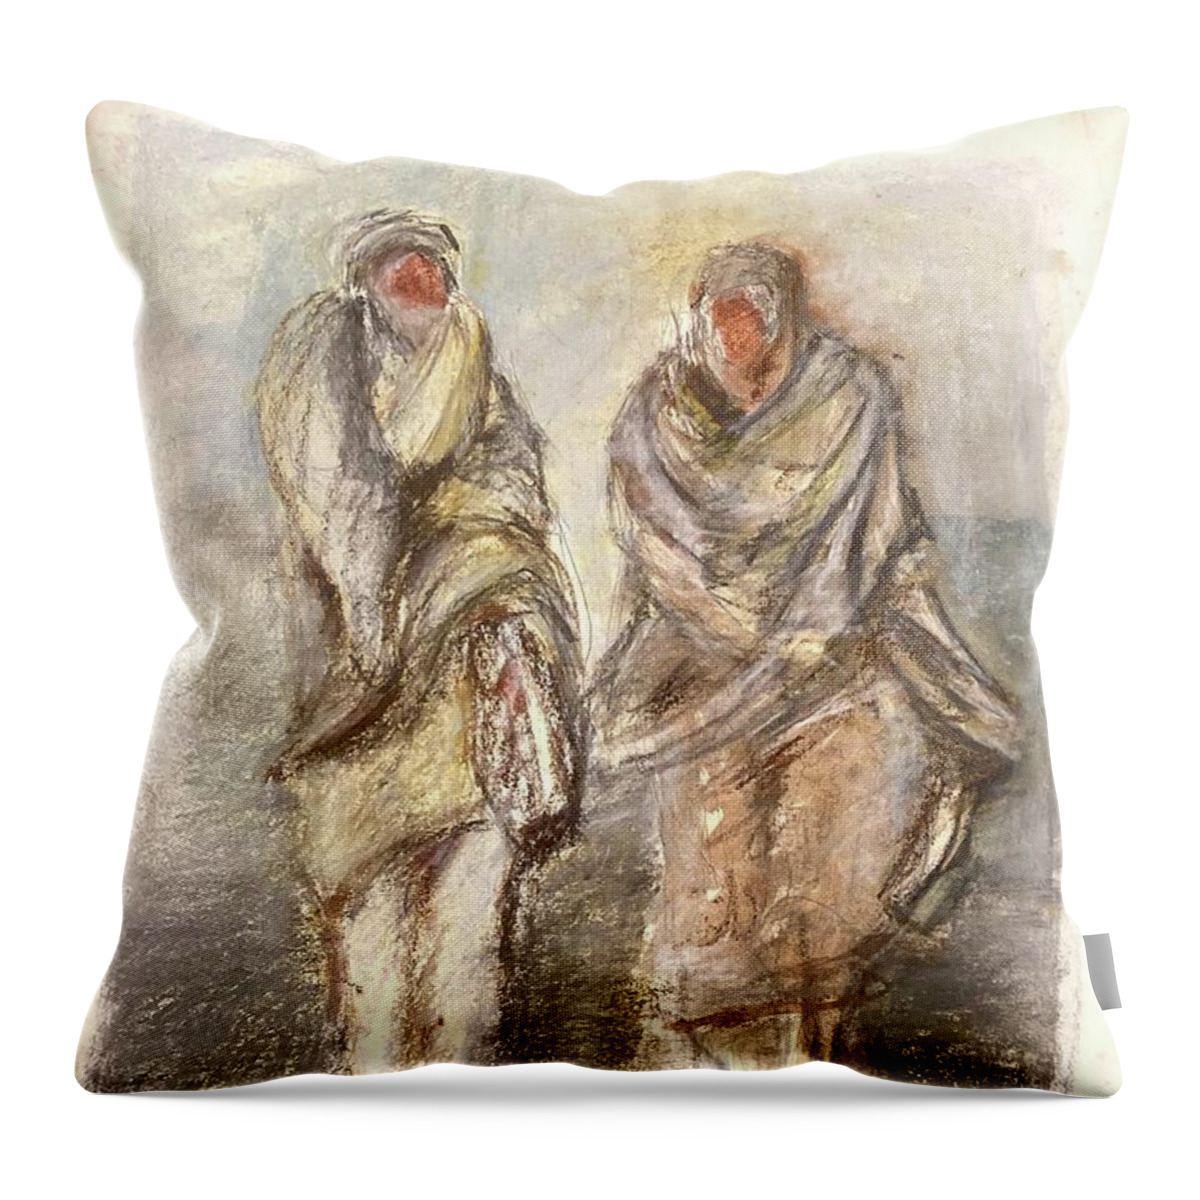 Desert Throw Pillow featuring the painting Desert by David Euler